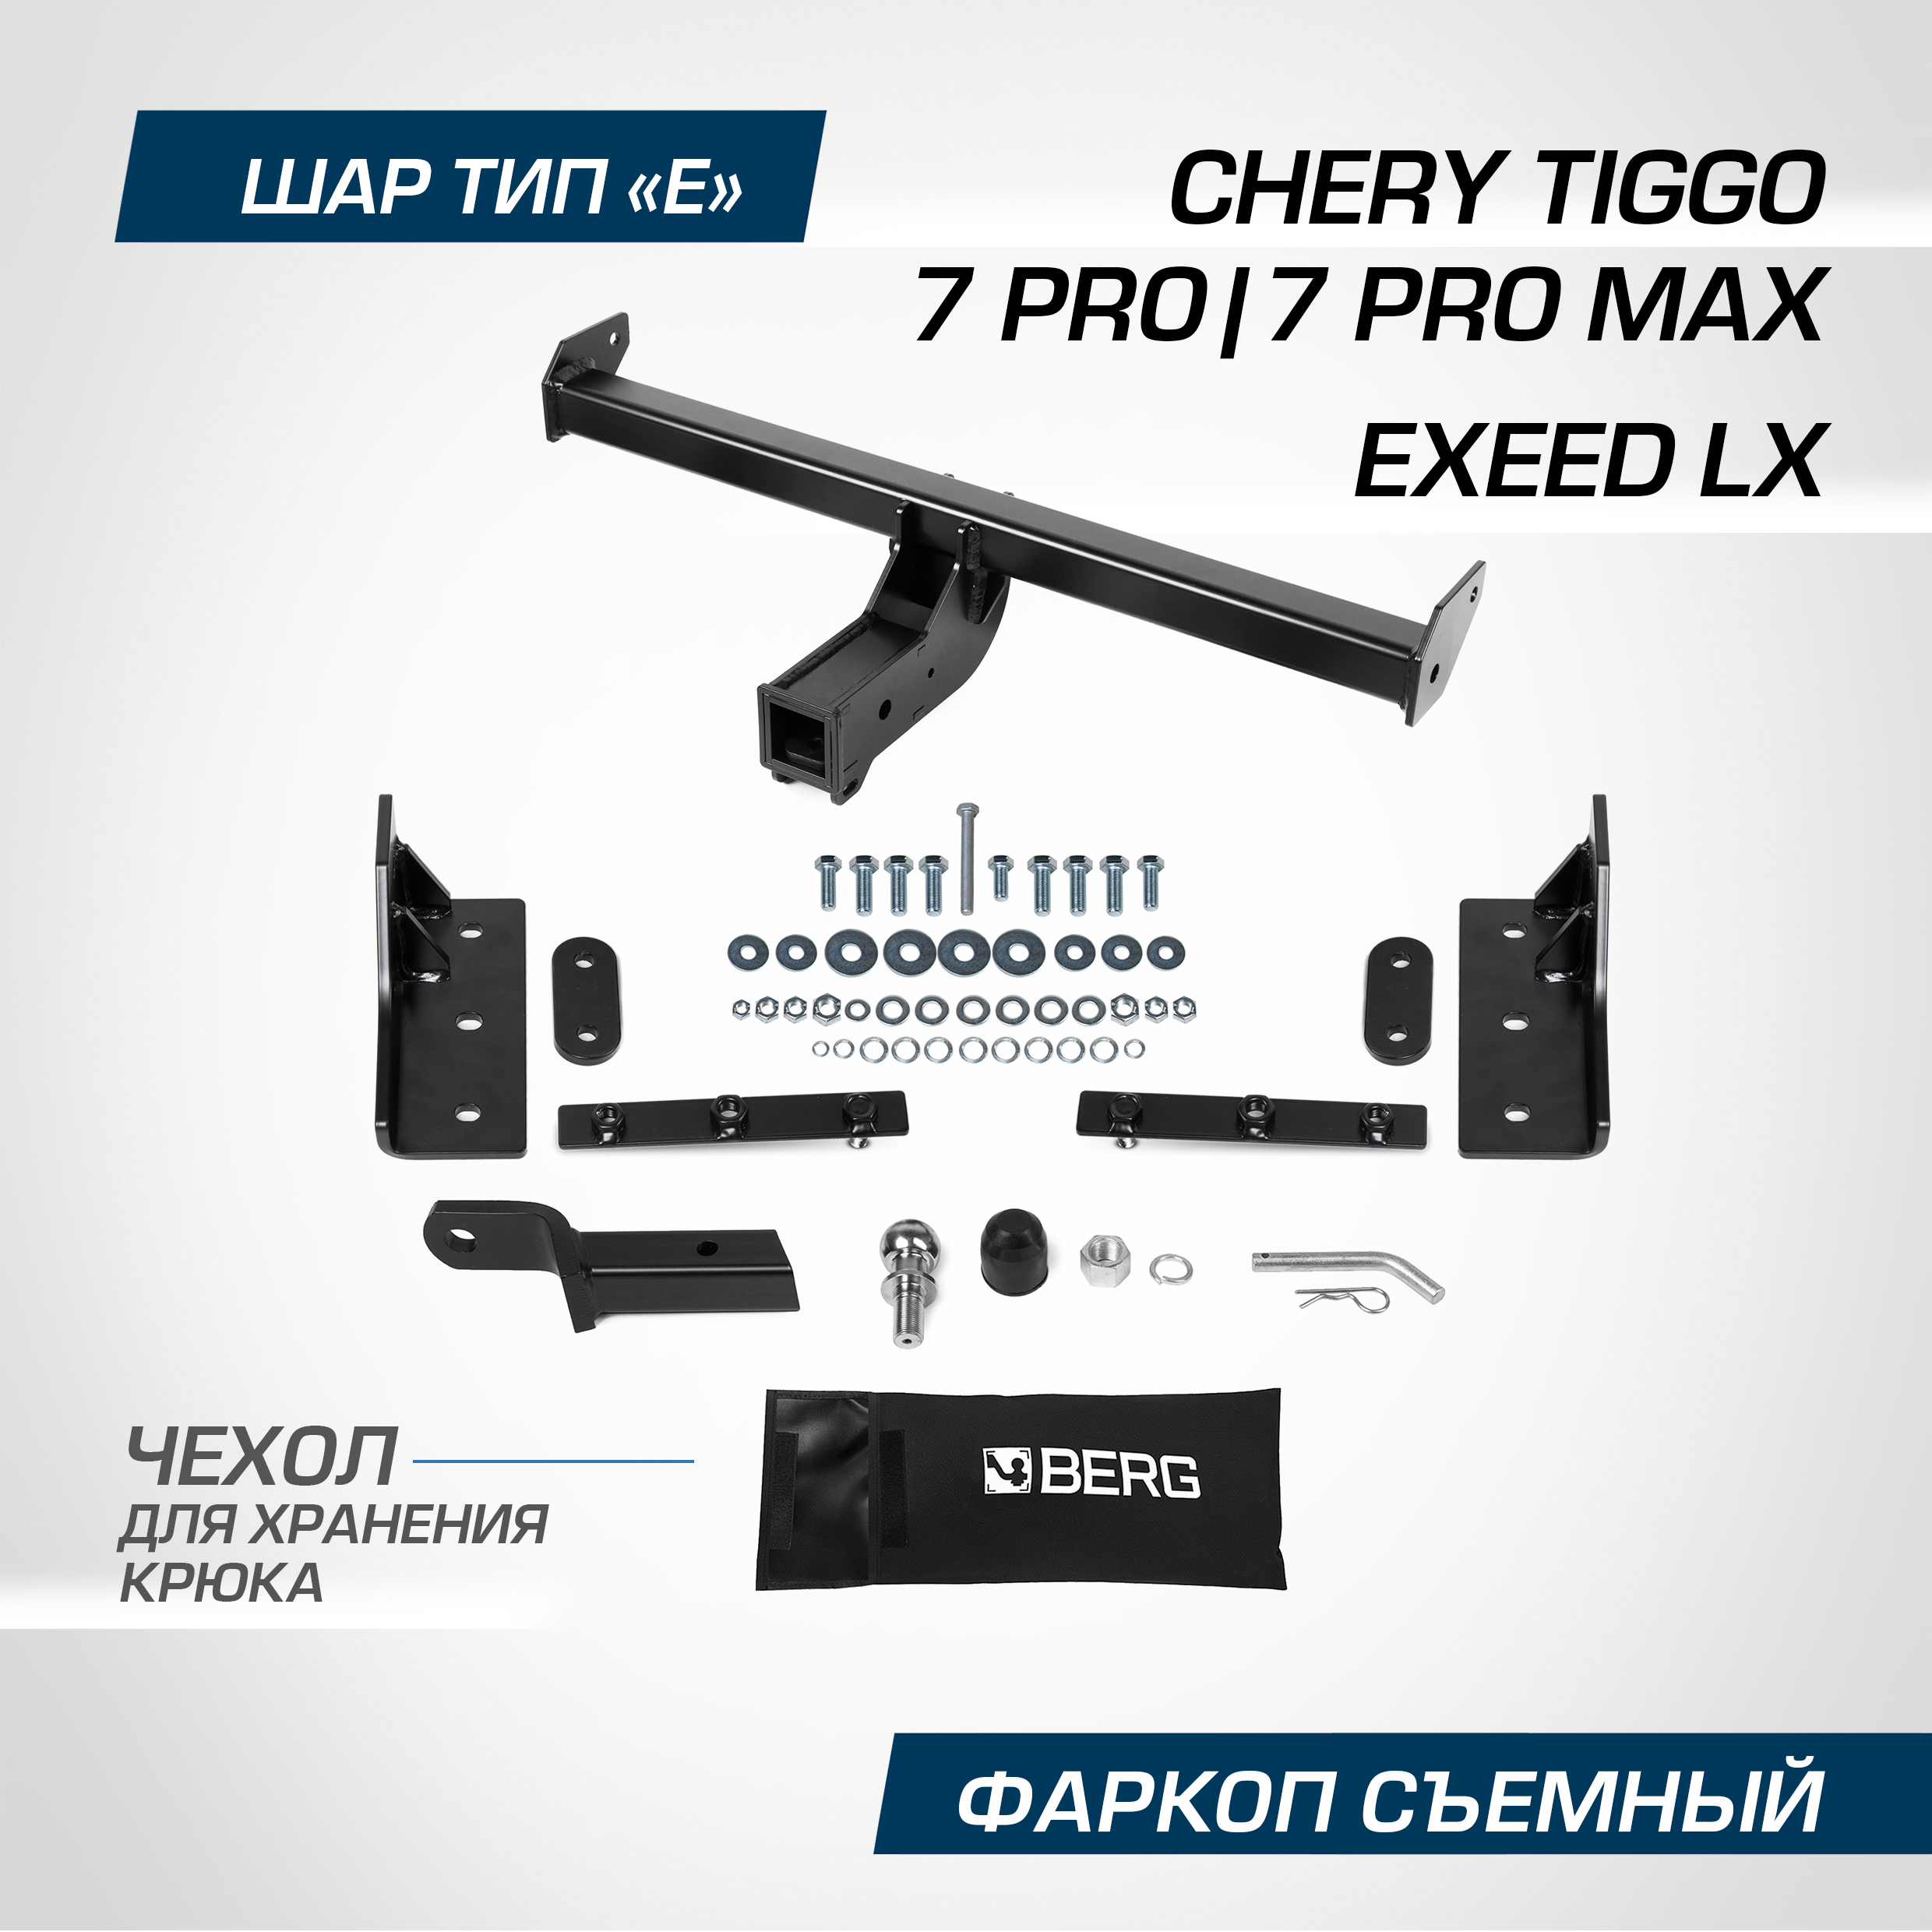 Фаркоп Berg Chery Tiggo 7 Pro 2020-/Tiggo 7 Pro Max 2022-/Exeed LX 2022- шар E, F.0912.002